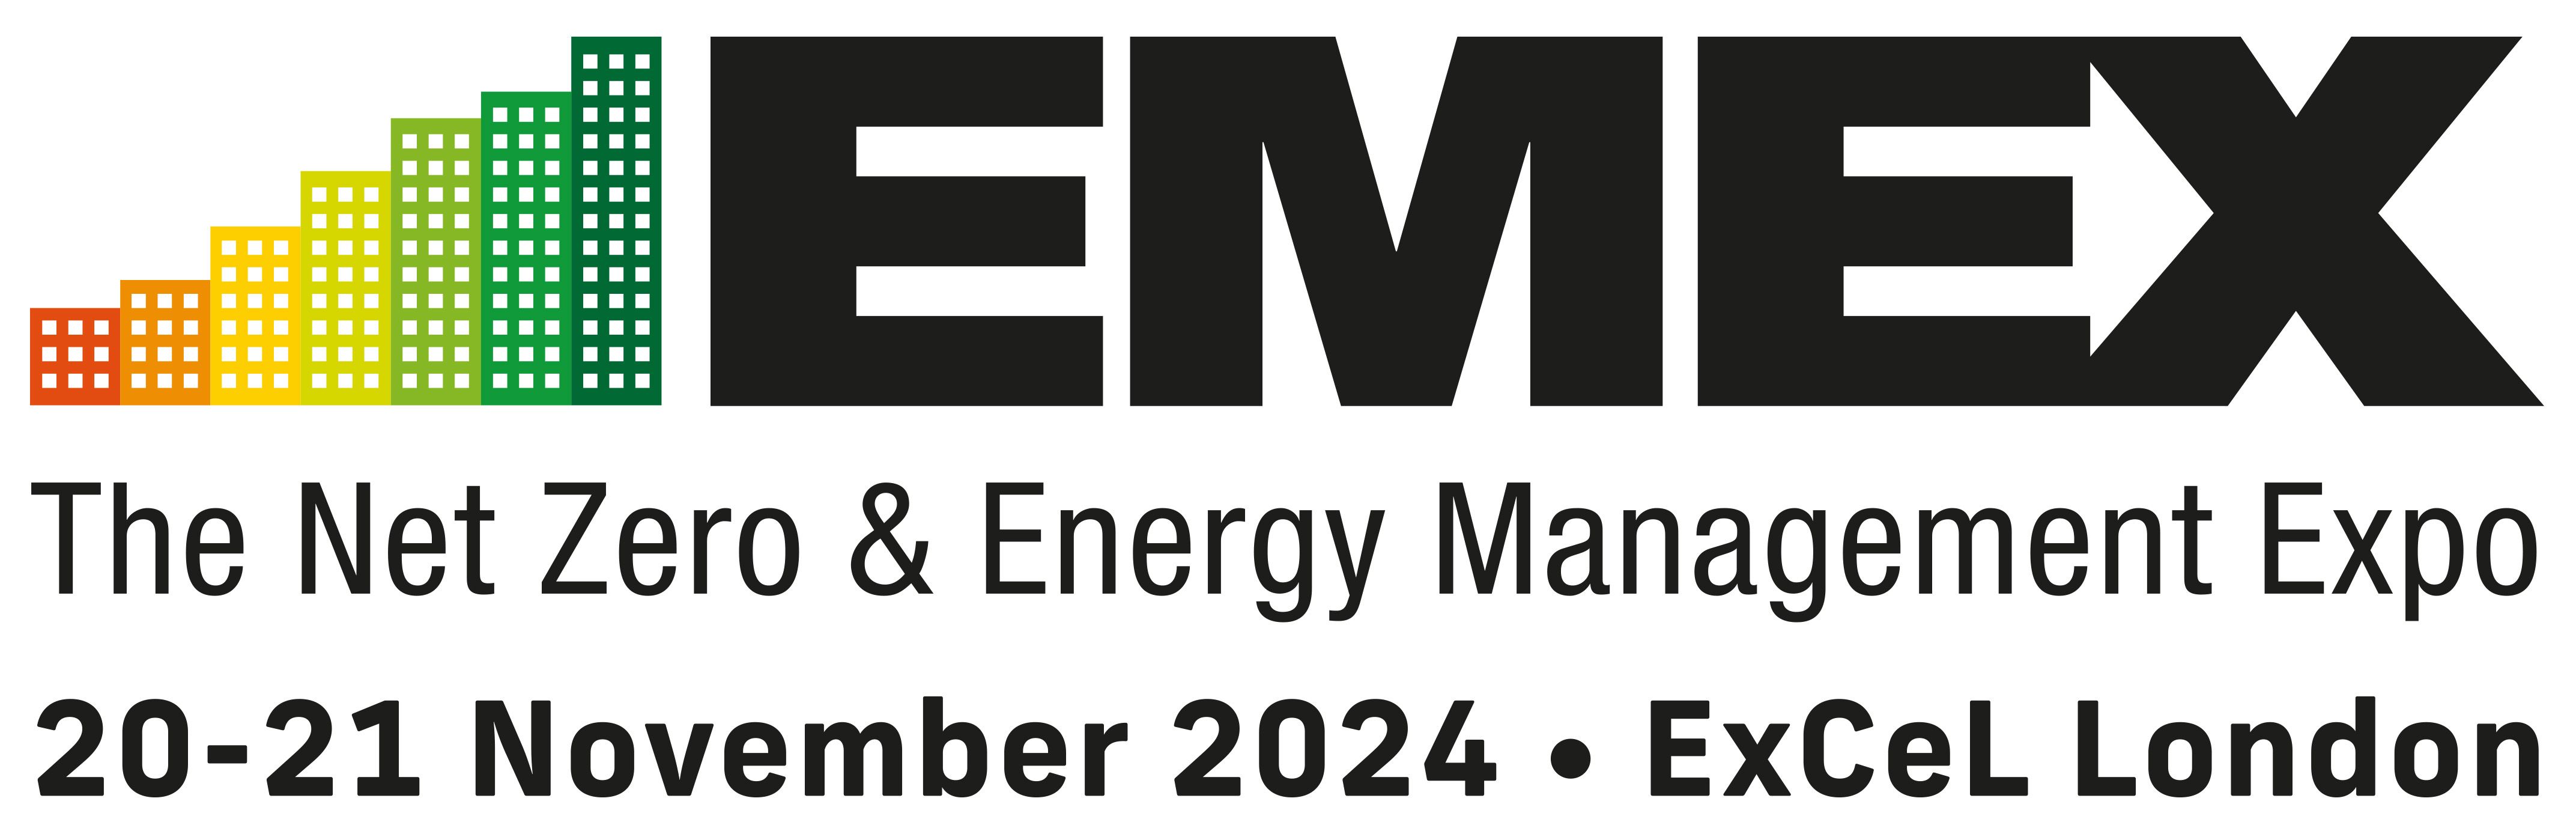 EMEX logo